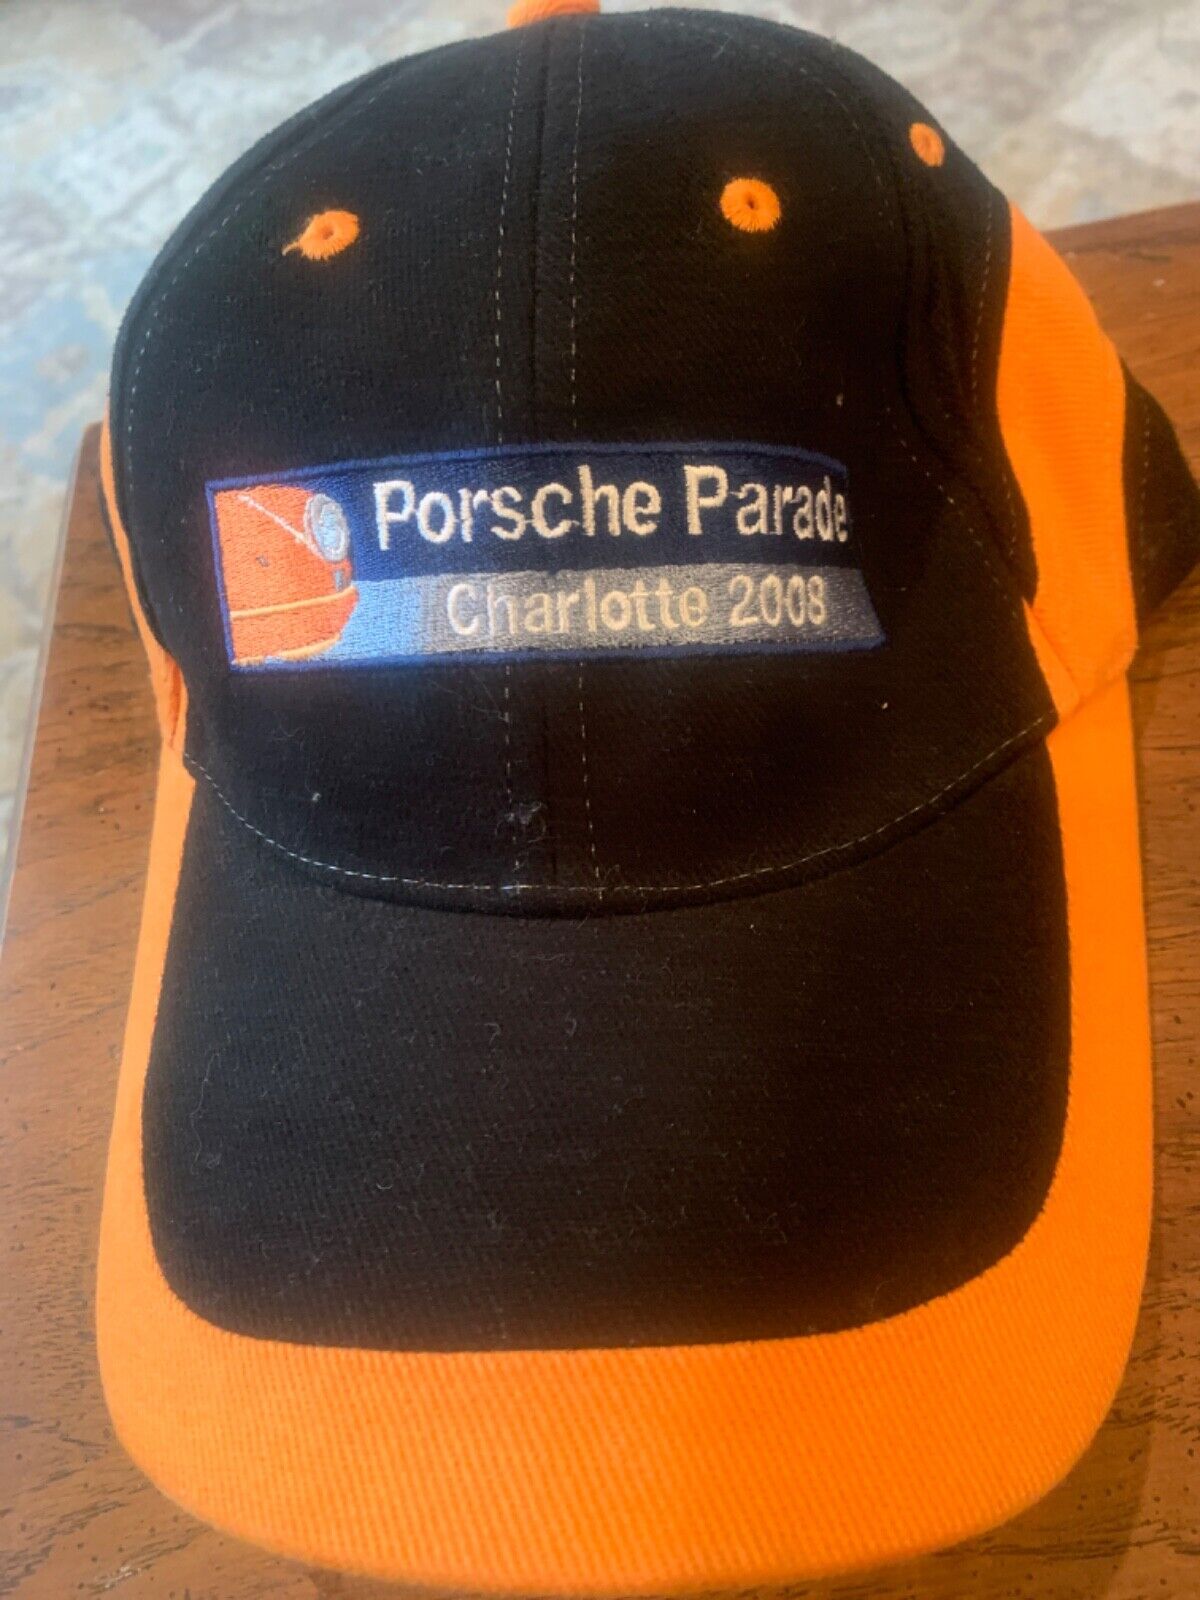 Porsche Parade Charlotte 2008 Hat Cap - Adjustable, Very Rare, VG, never worn